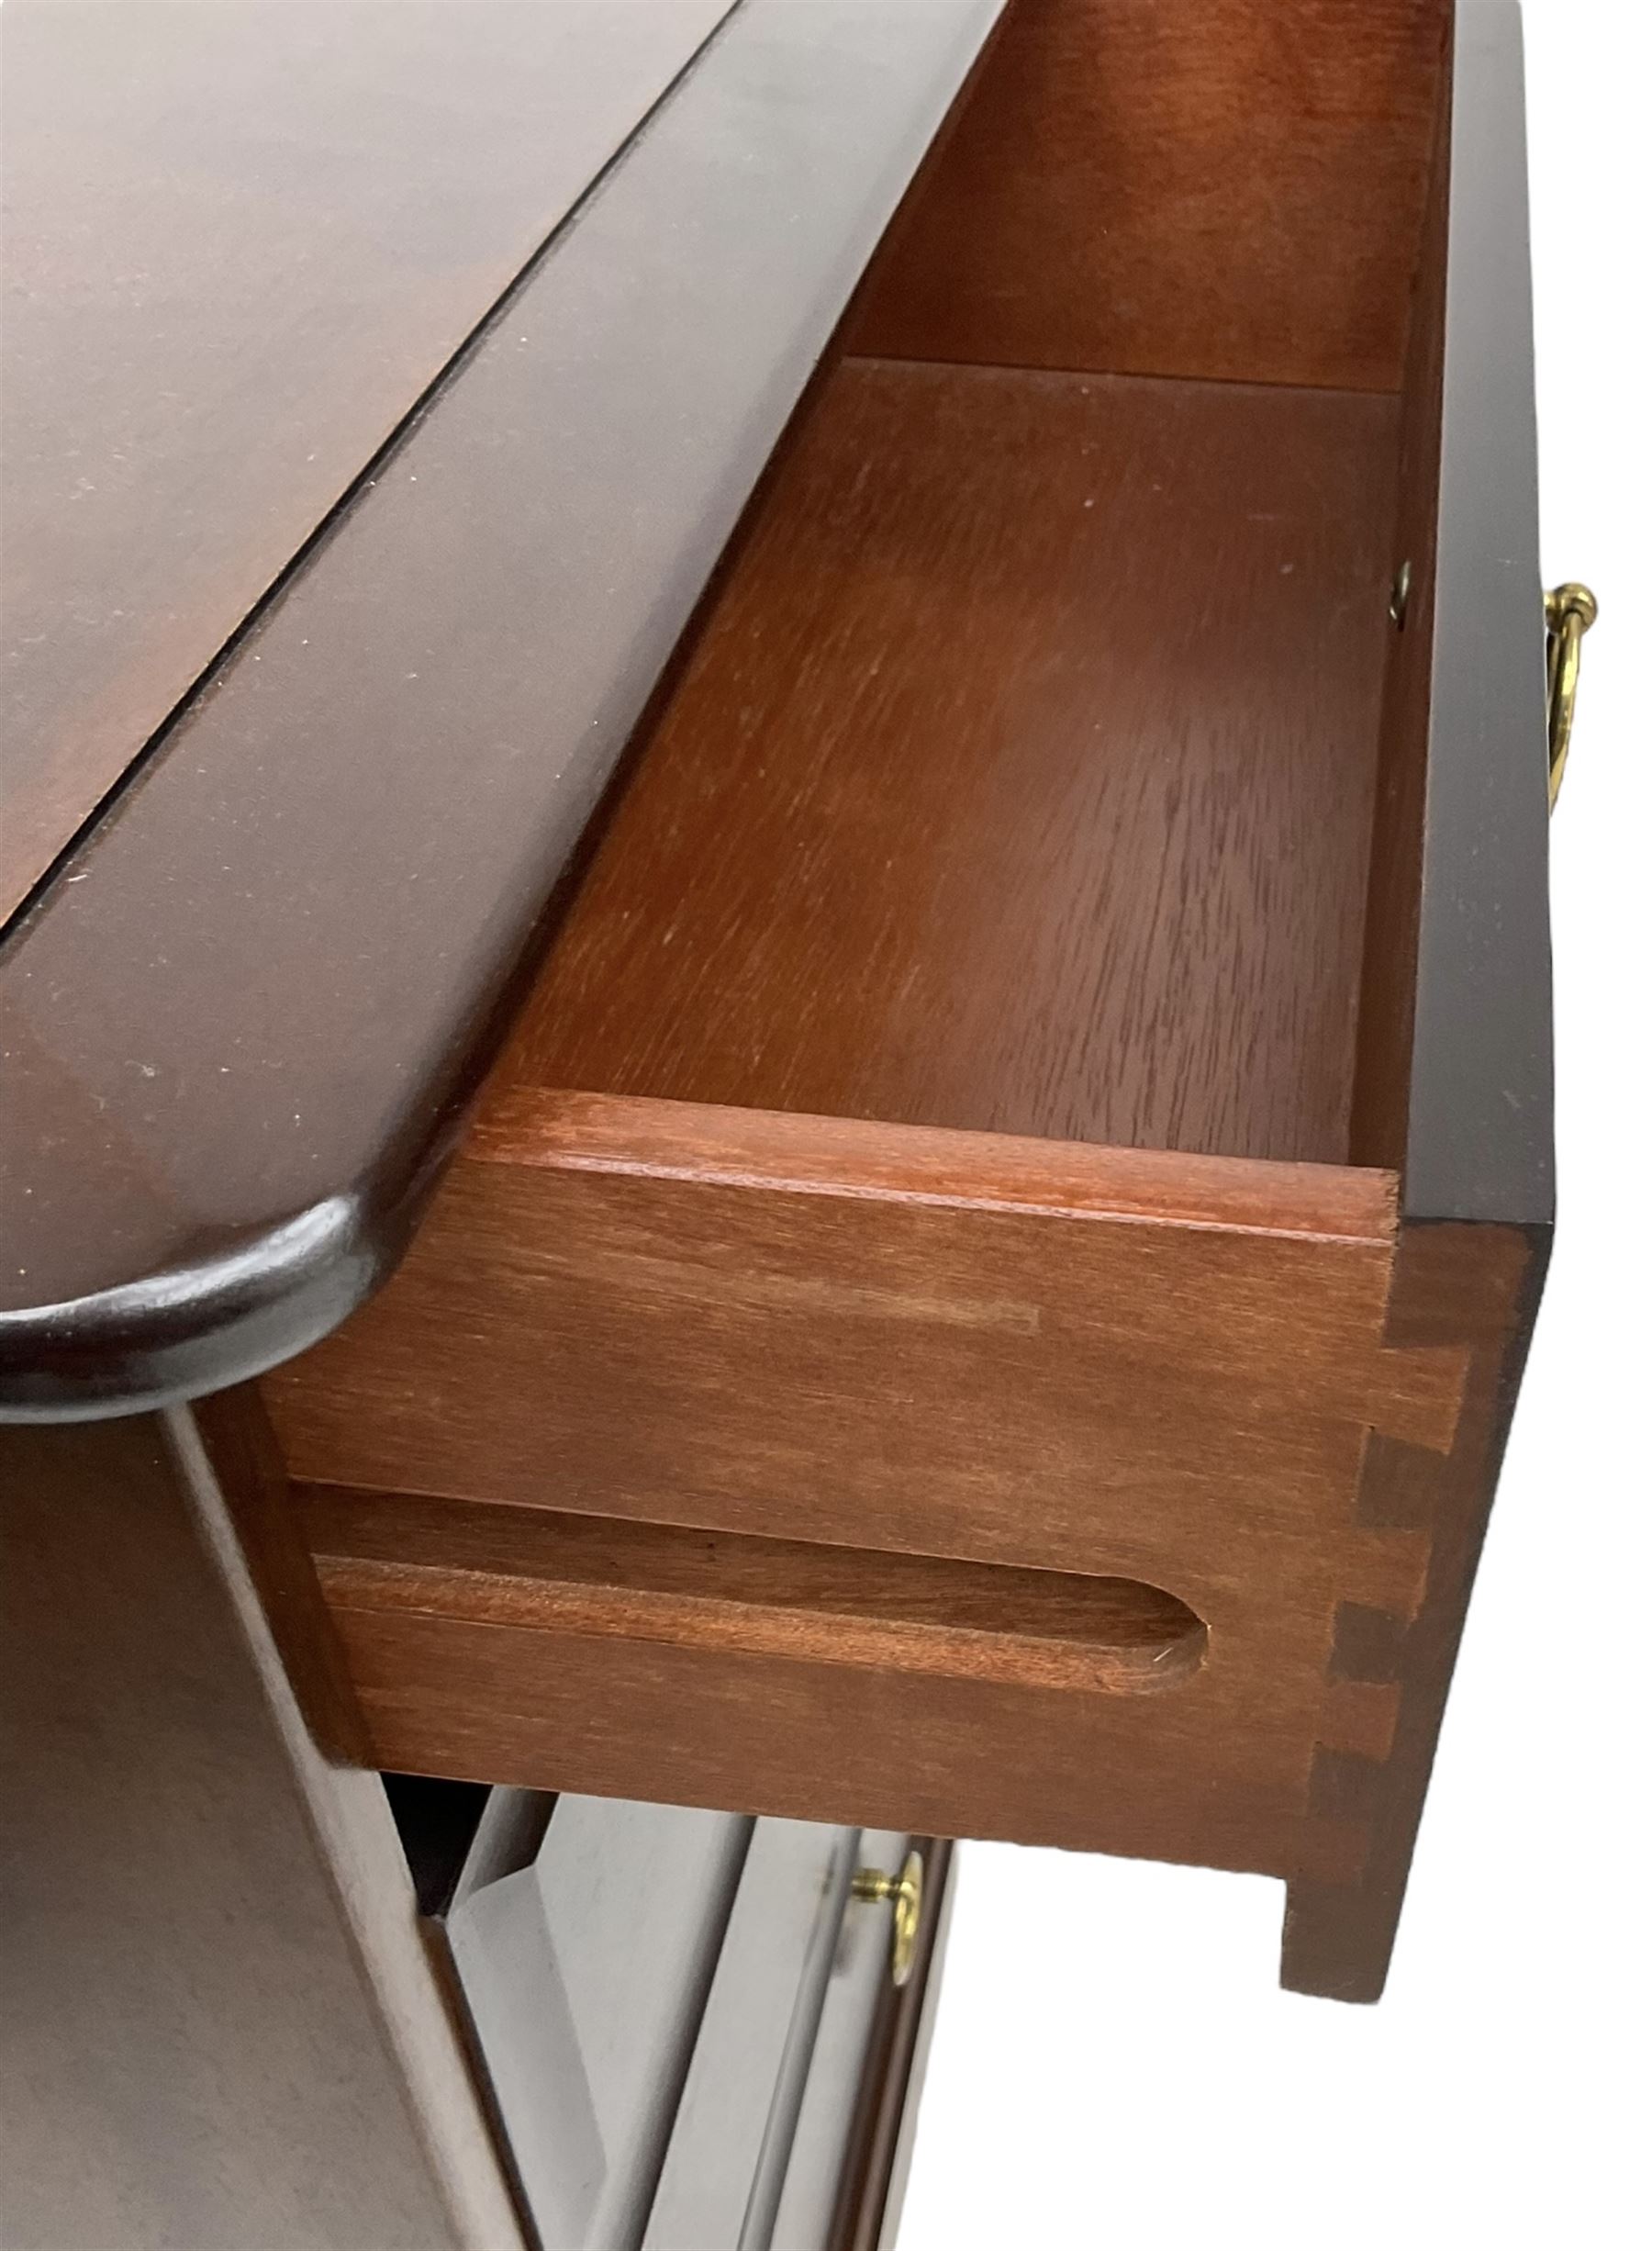 Stag Minstrel - pair of bedside pedestal chests - Image 5 of 5